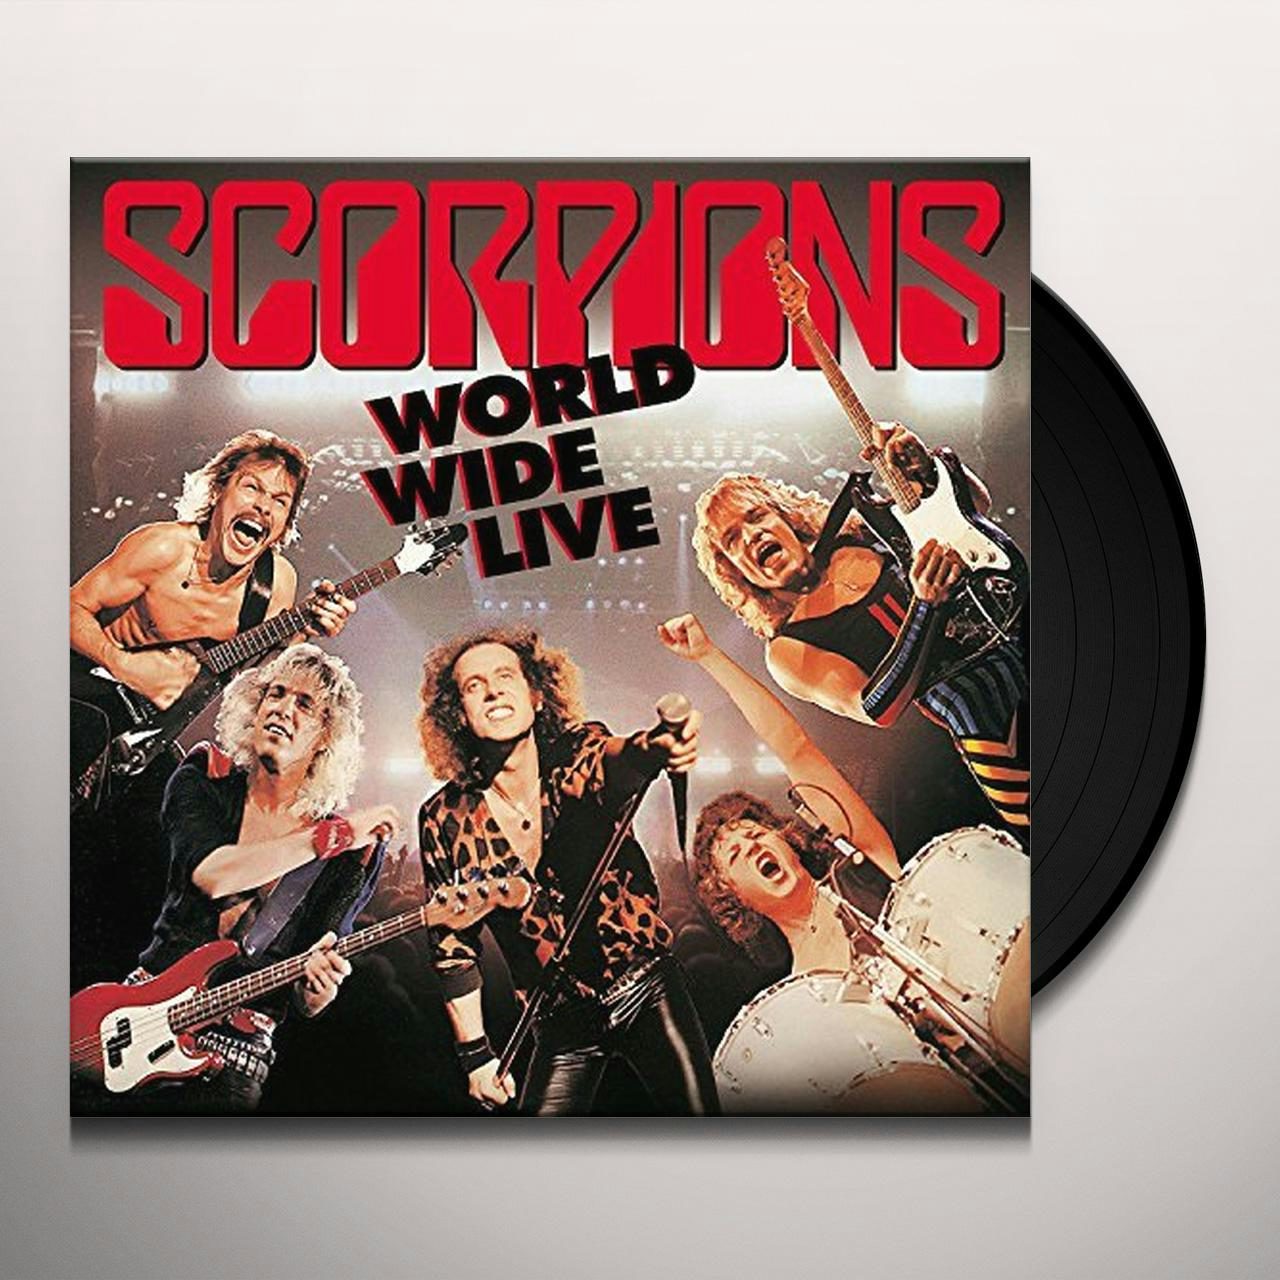 Scorpions world. Группа скорпионс 1985. Скорпионс виниловые пластинки. Пластинка скорпионс. Скорпионс винил 1984.